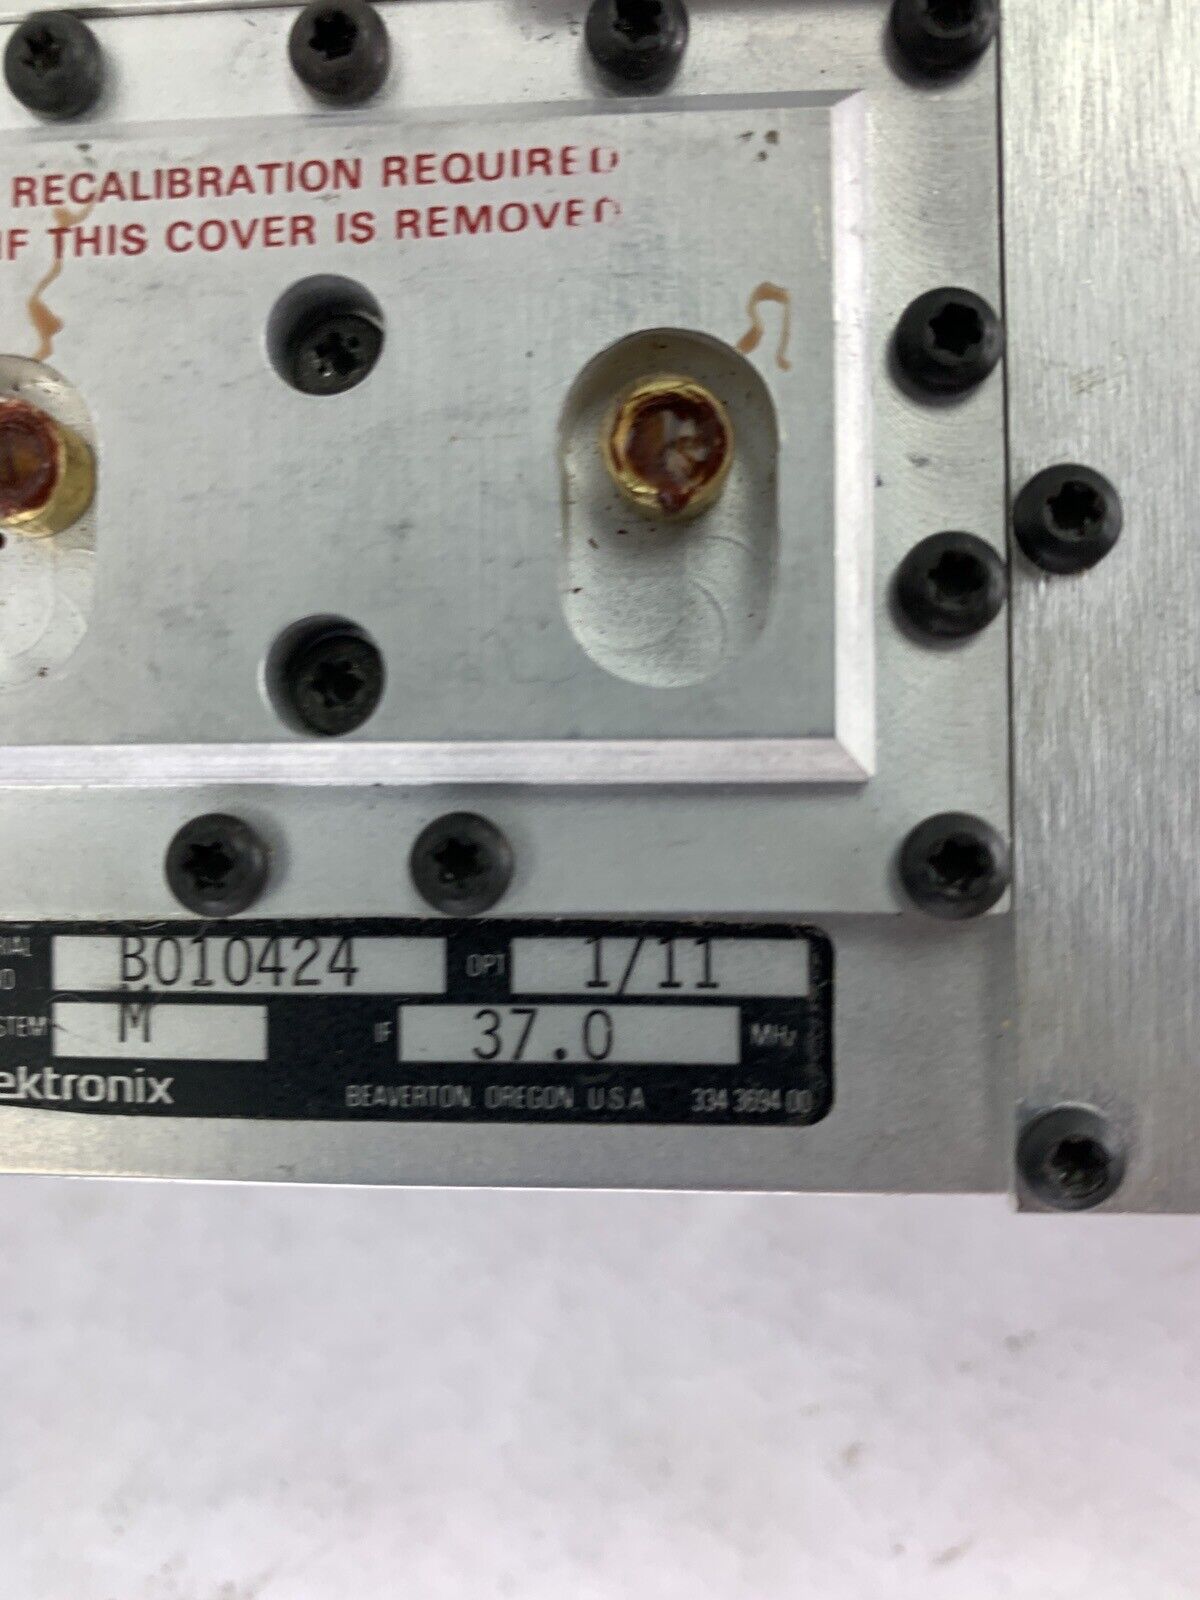 Tektronix TDC2 UHF Tunable Down Converter Untested